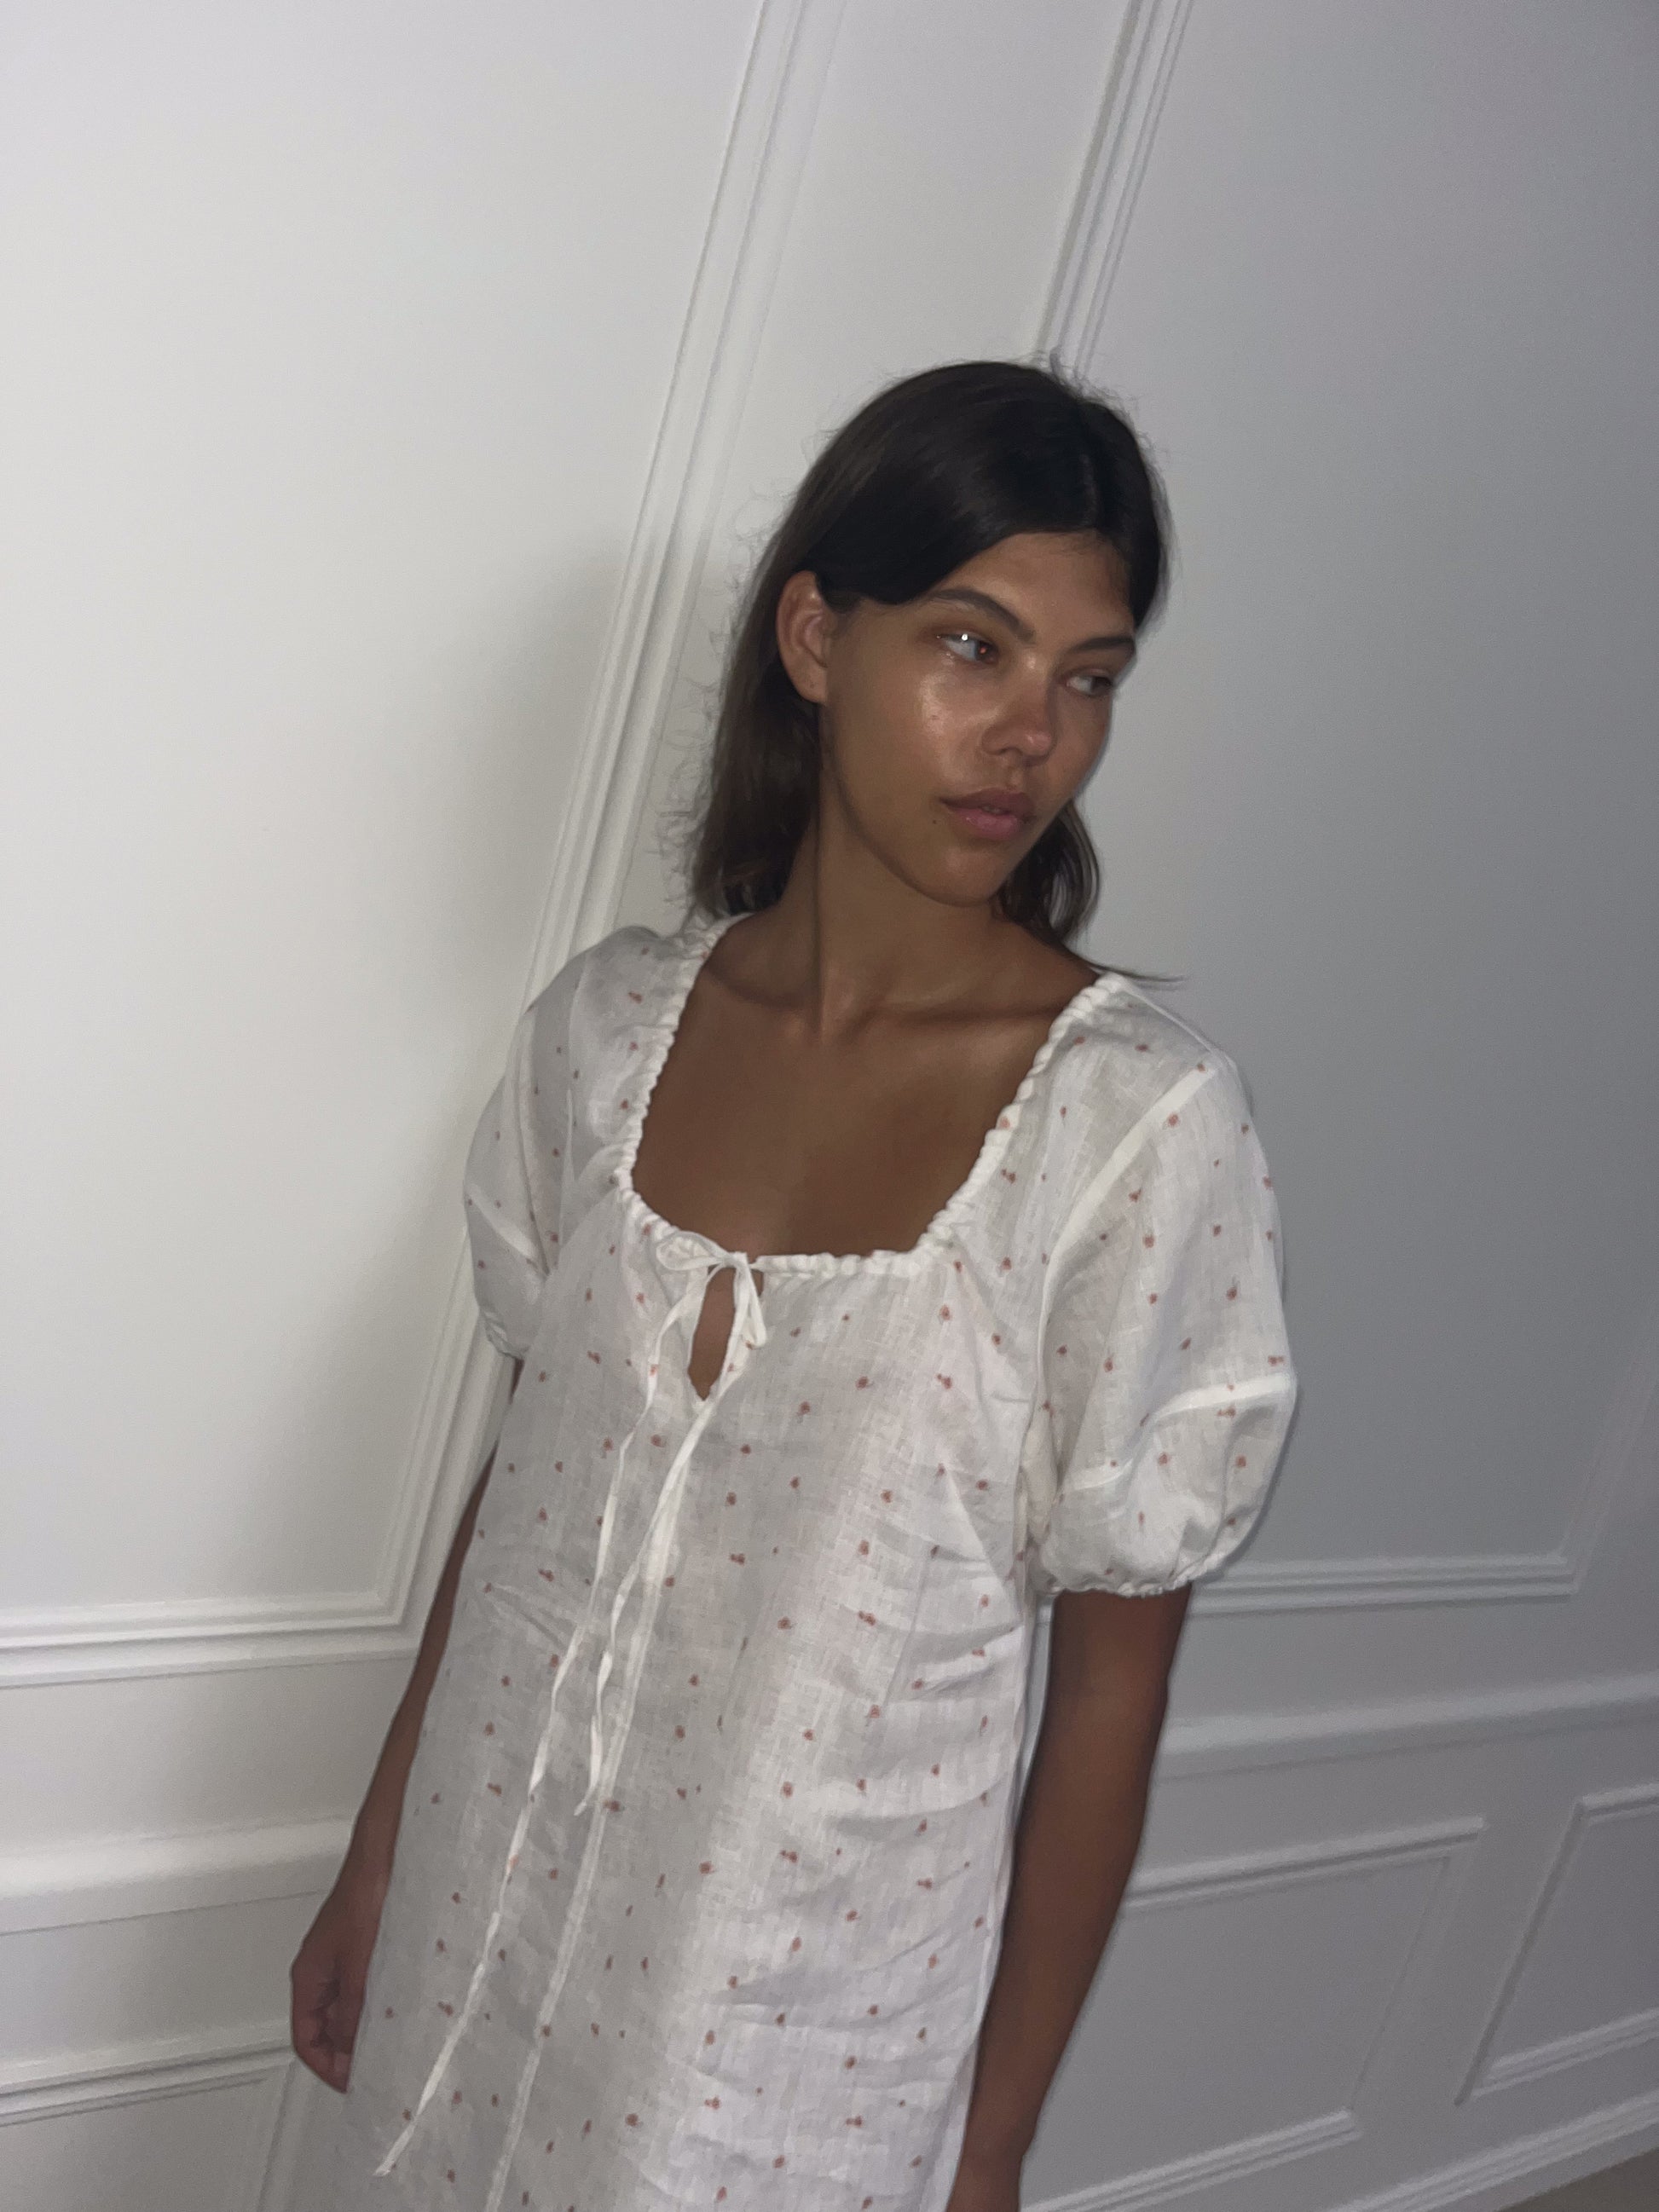 Female model wearing Curved Seam Midi Dress - Corsage Print by Deiji Studios against plain background